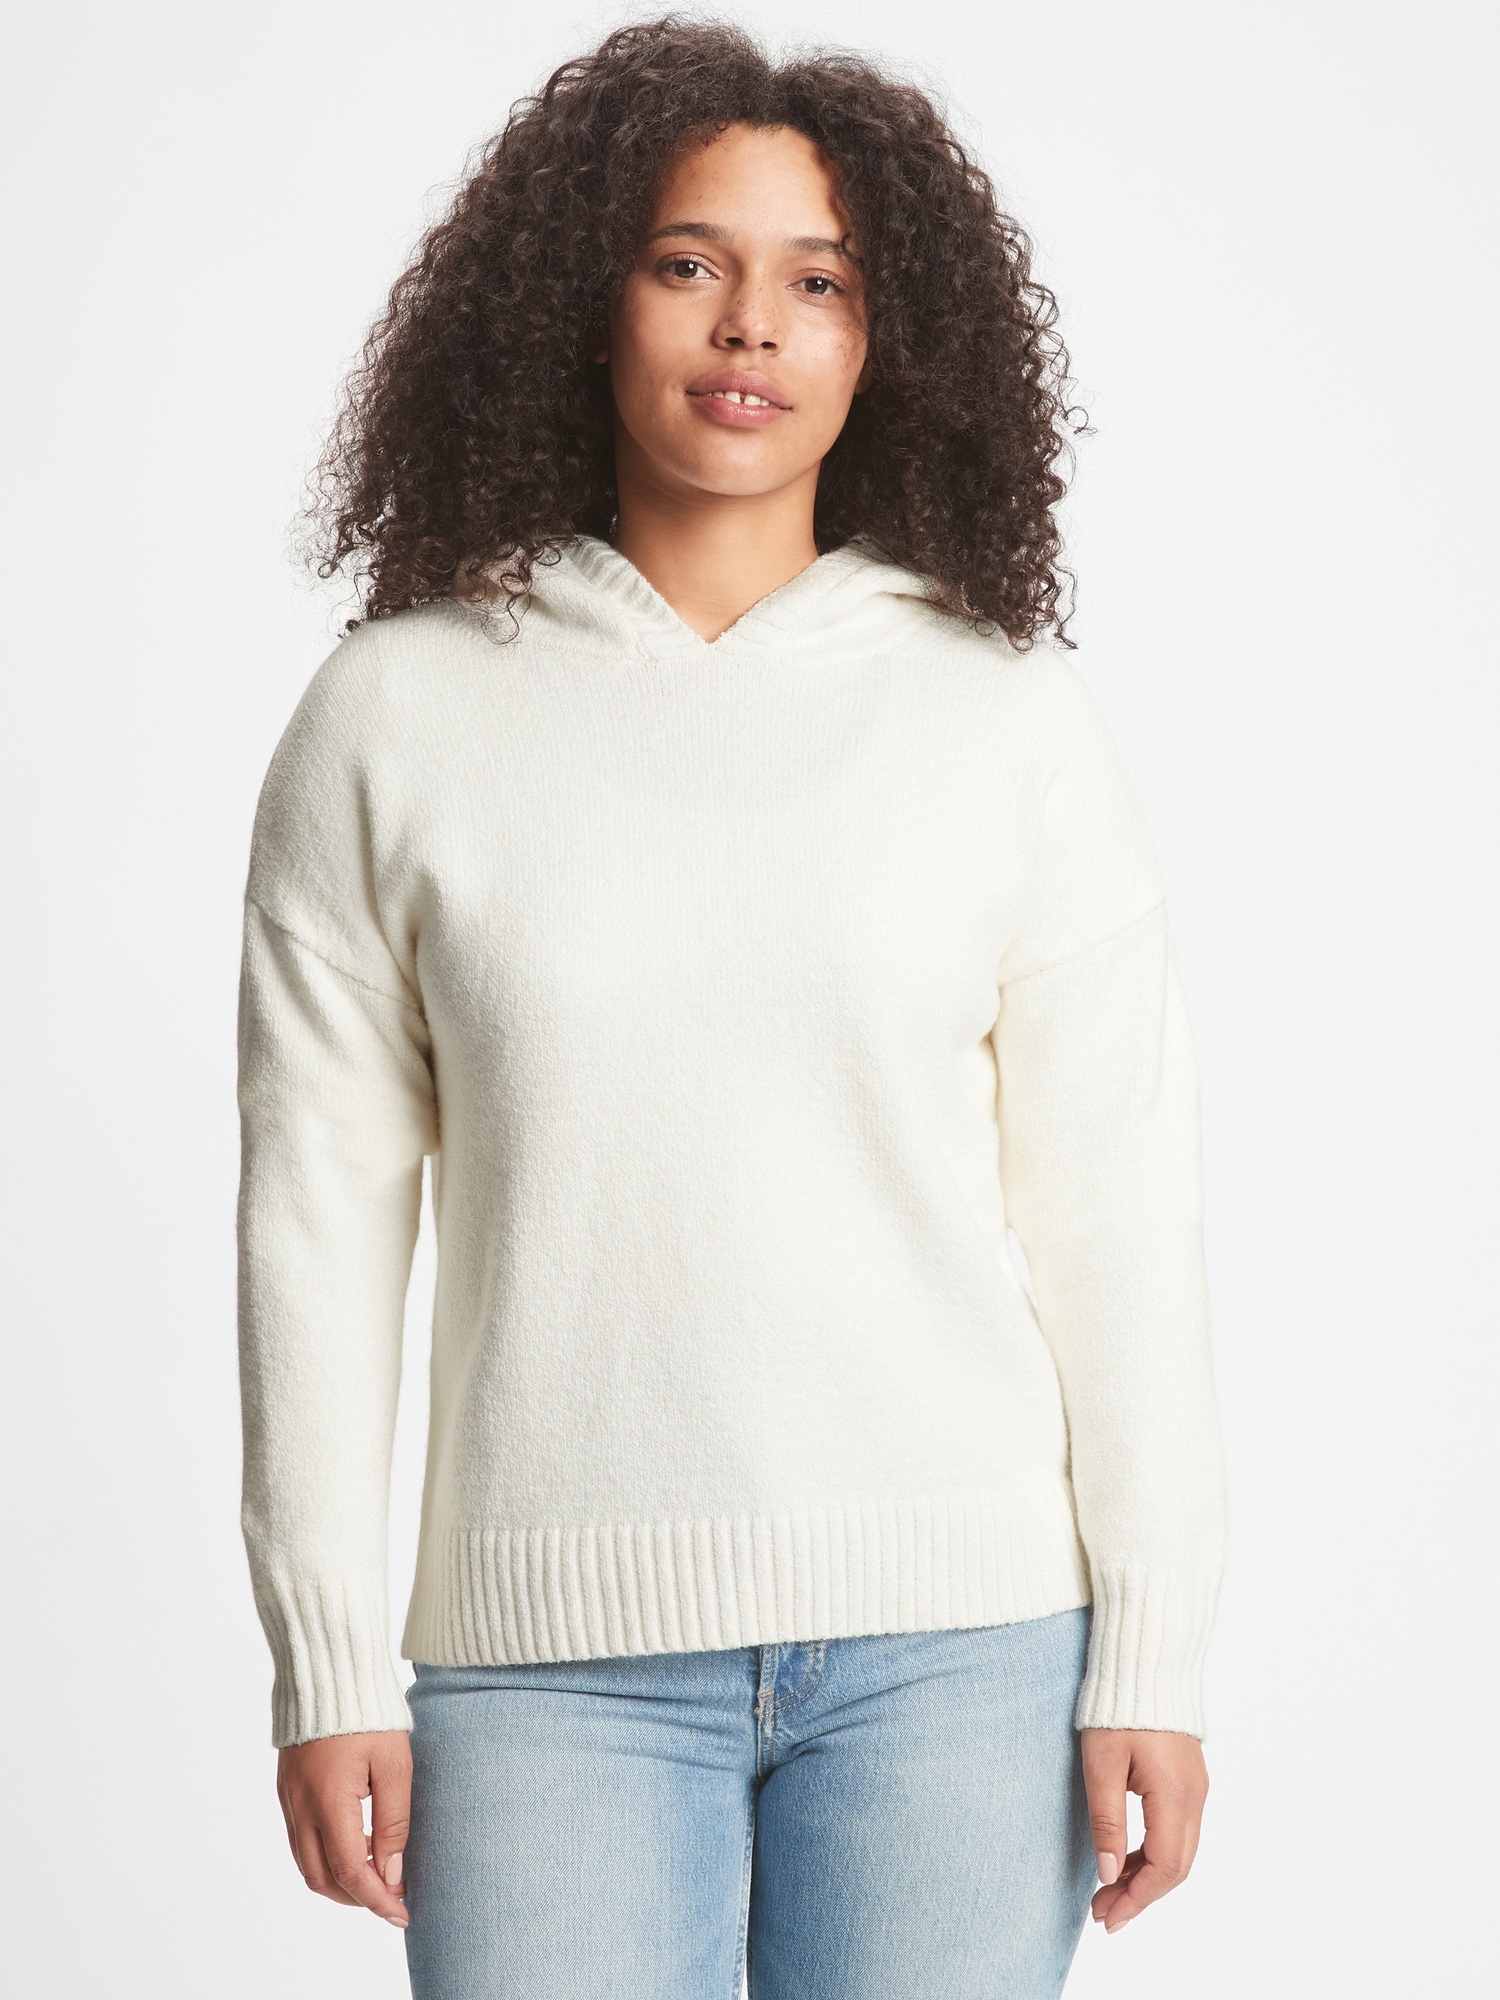 Cozy Pullover Hoodie Sweater | Gap Factory